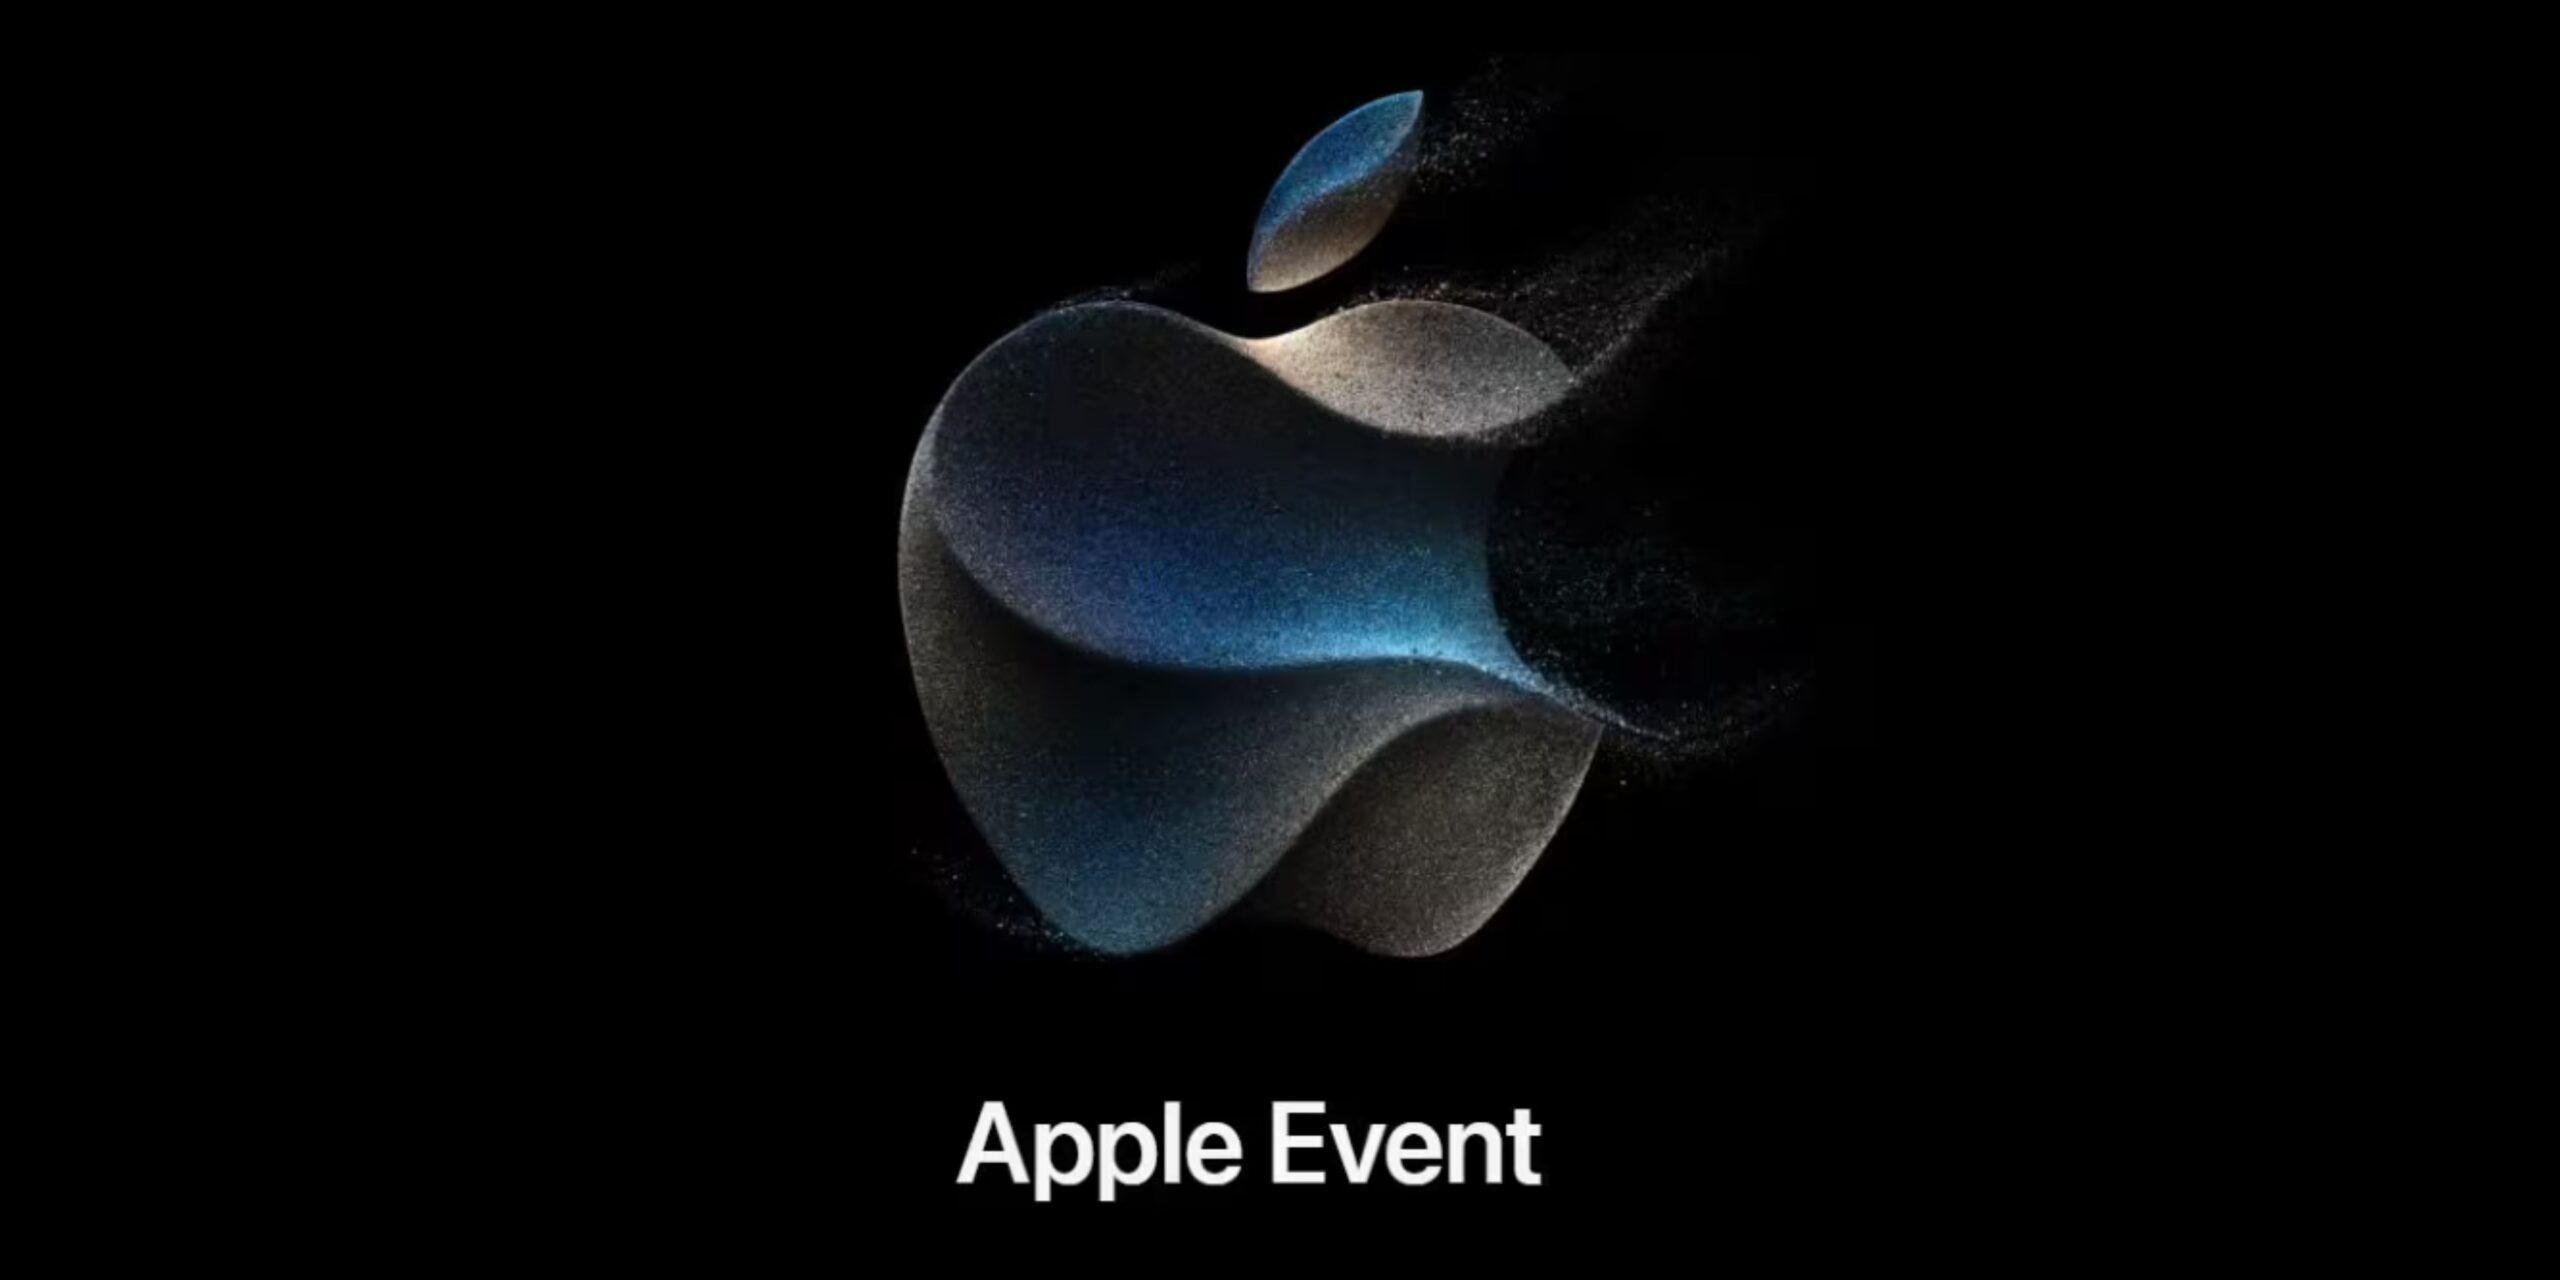 Apple's Wonderlust event